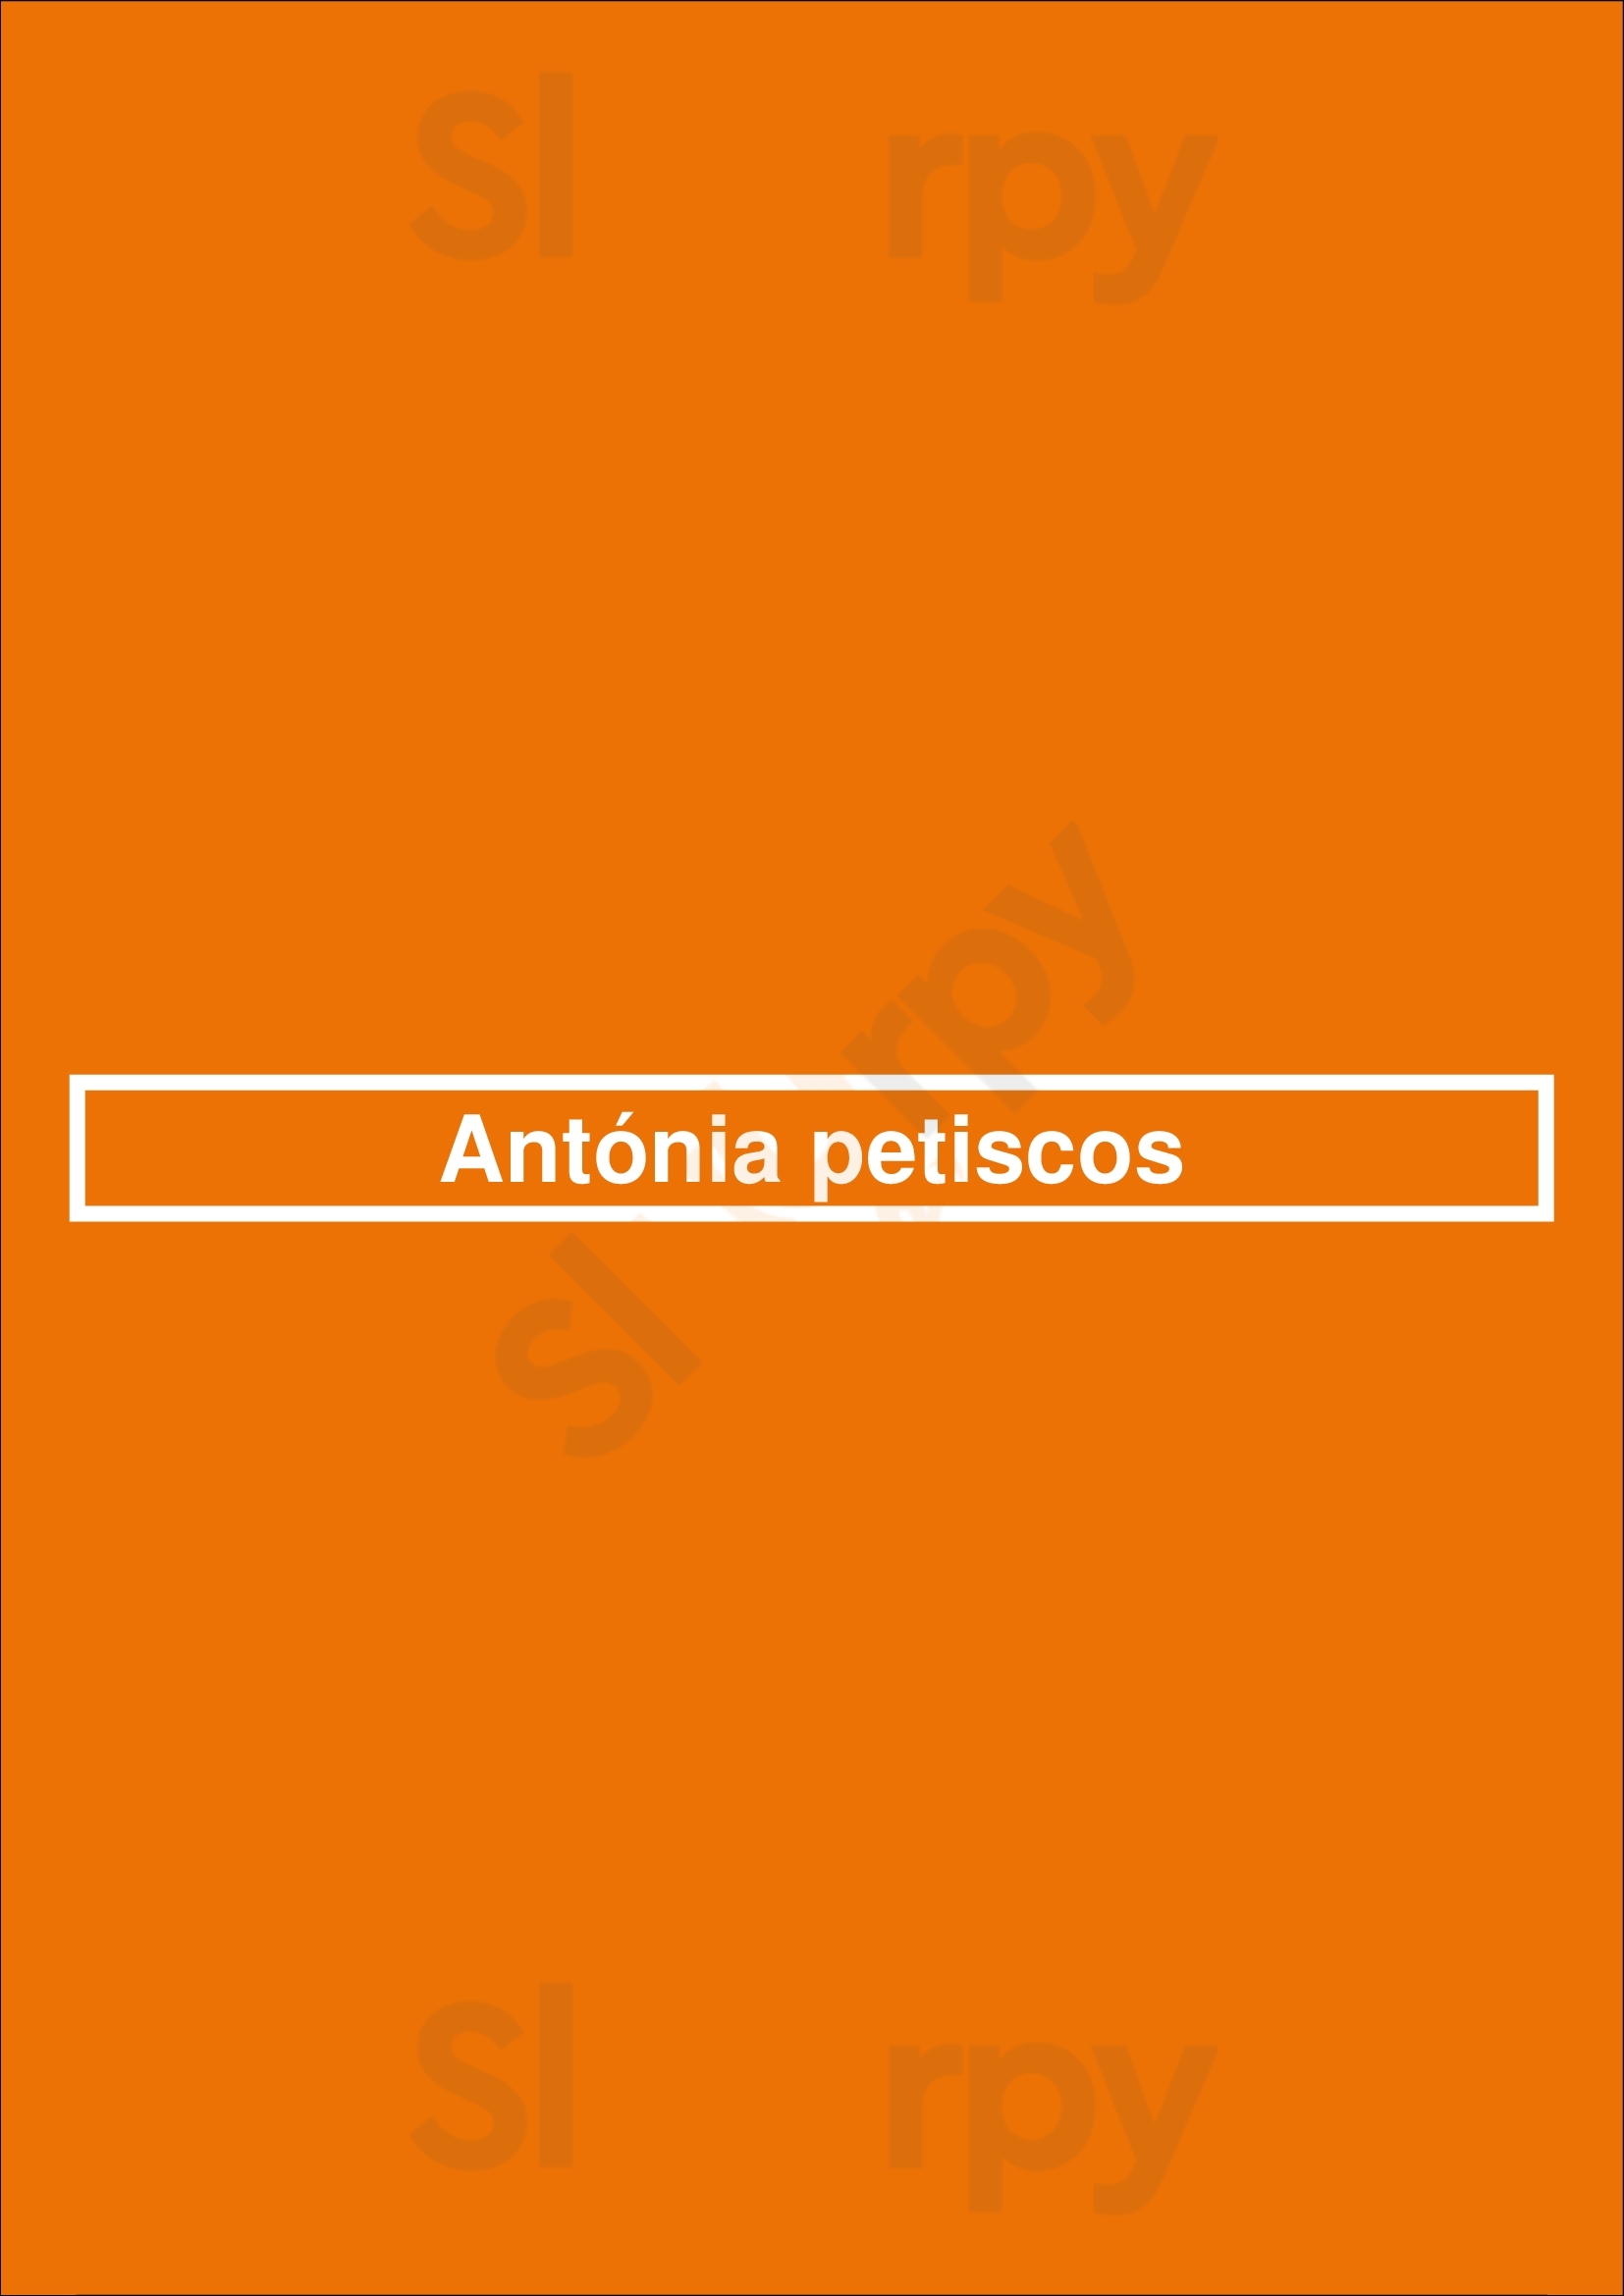 Antónia Petiscos Lisboa Menu - 1